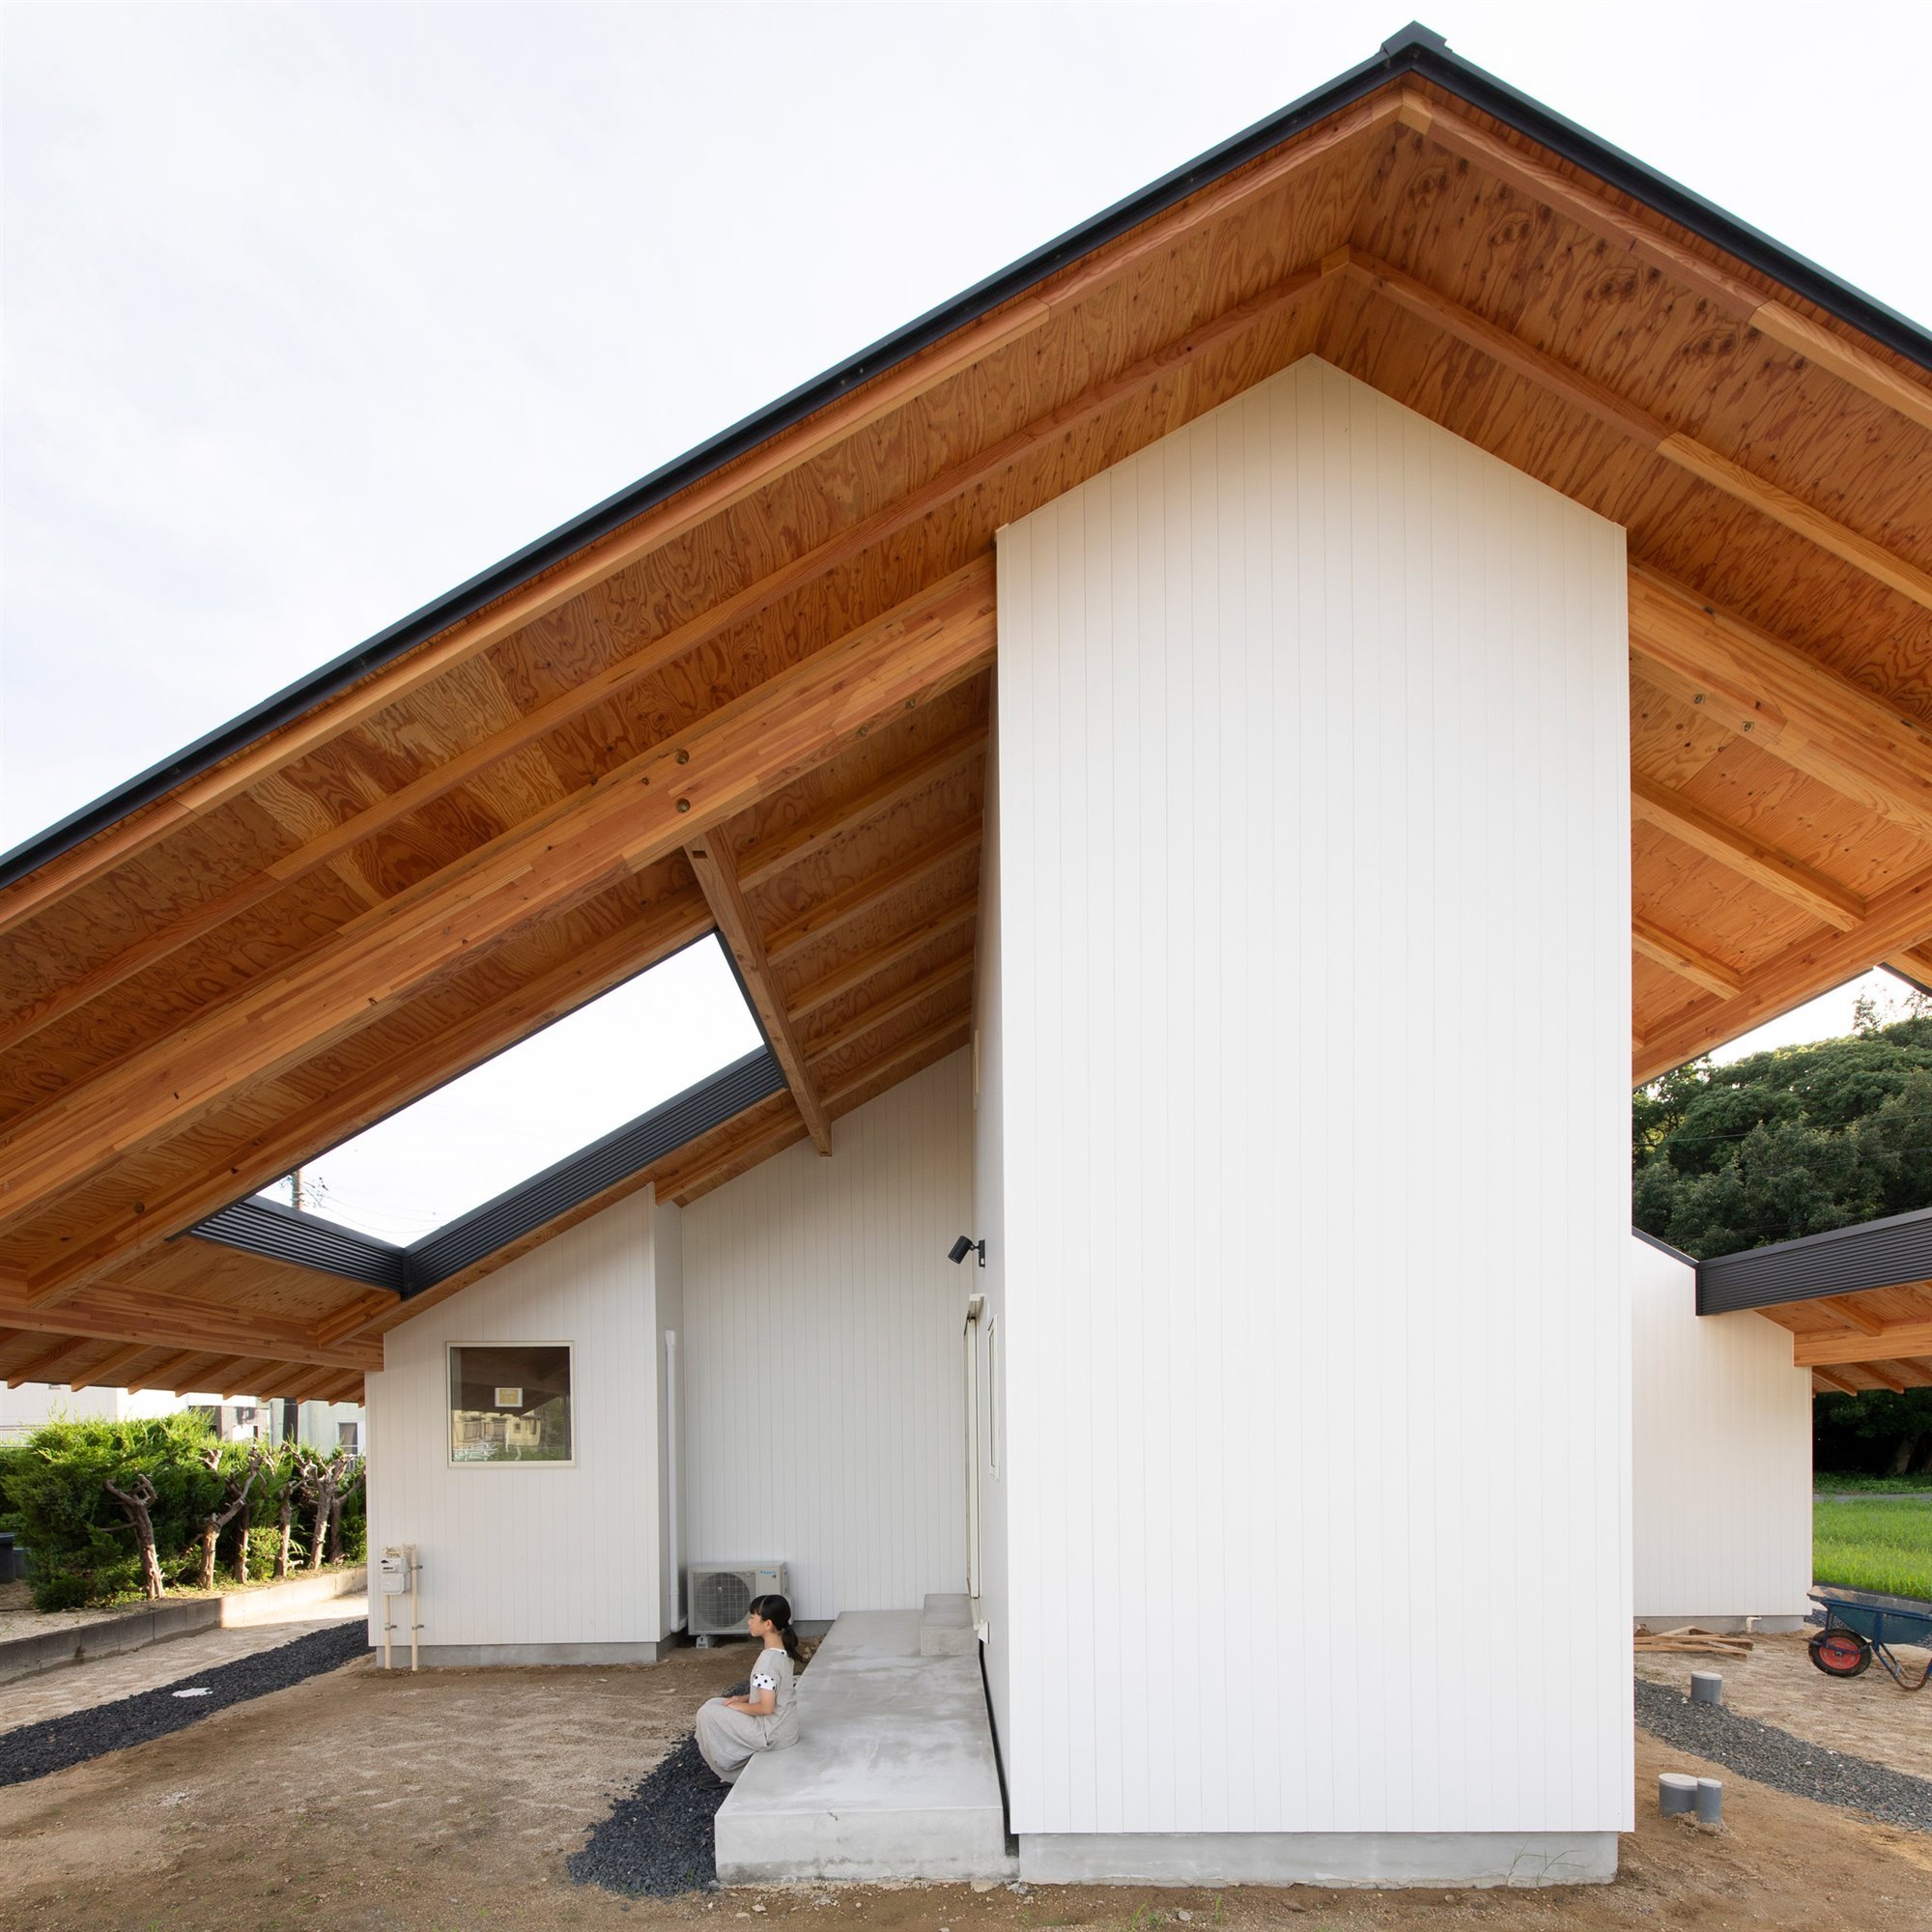 Casa en japon de los arquitectos Katsutoshi Sasaki + Associates